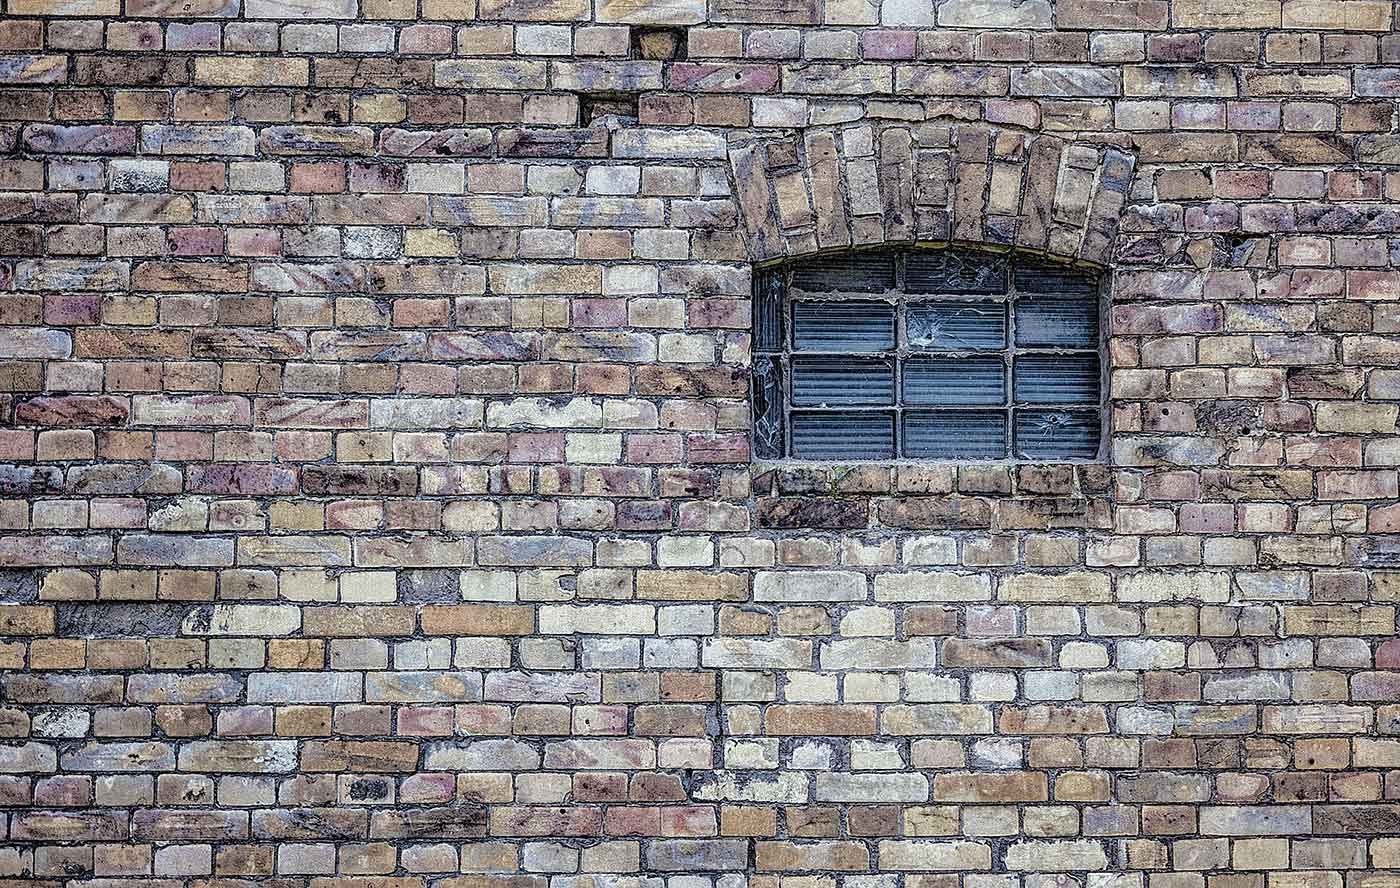 Window and a brick wall